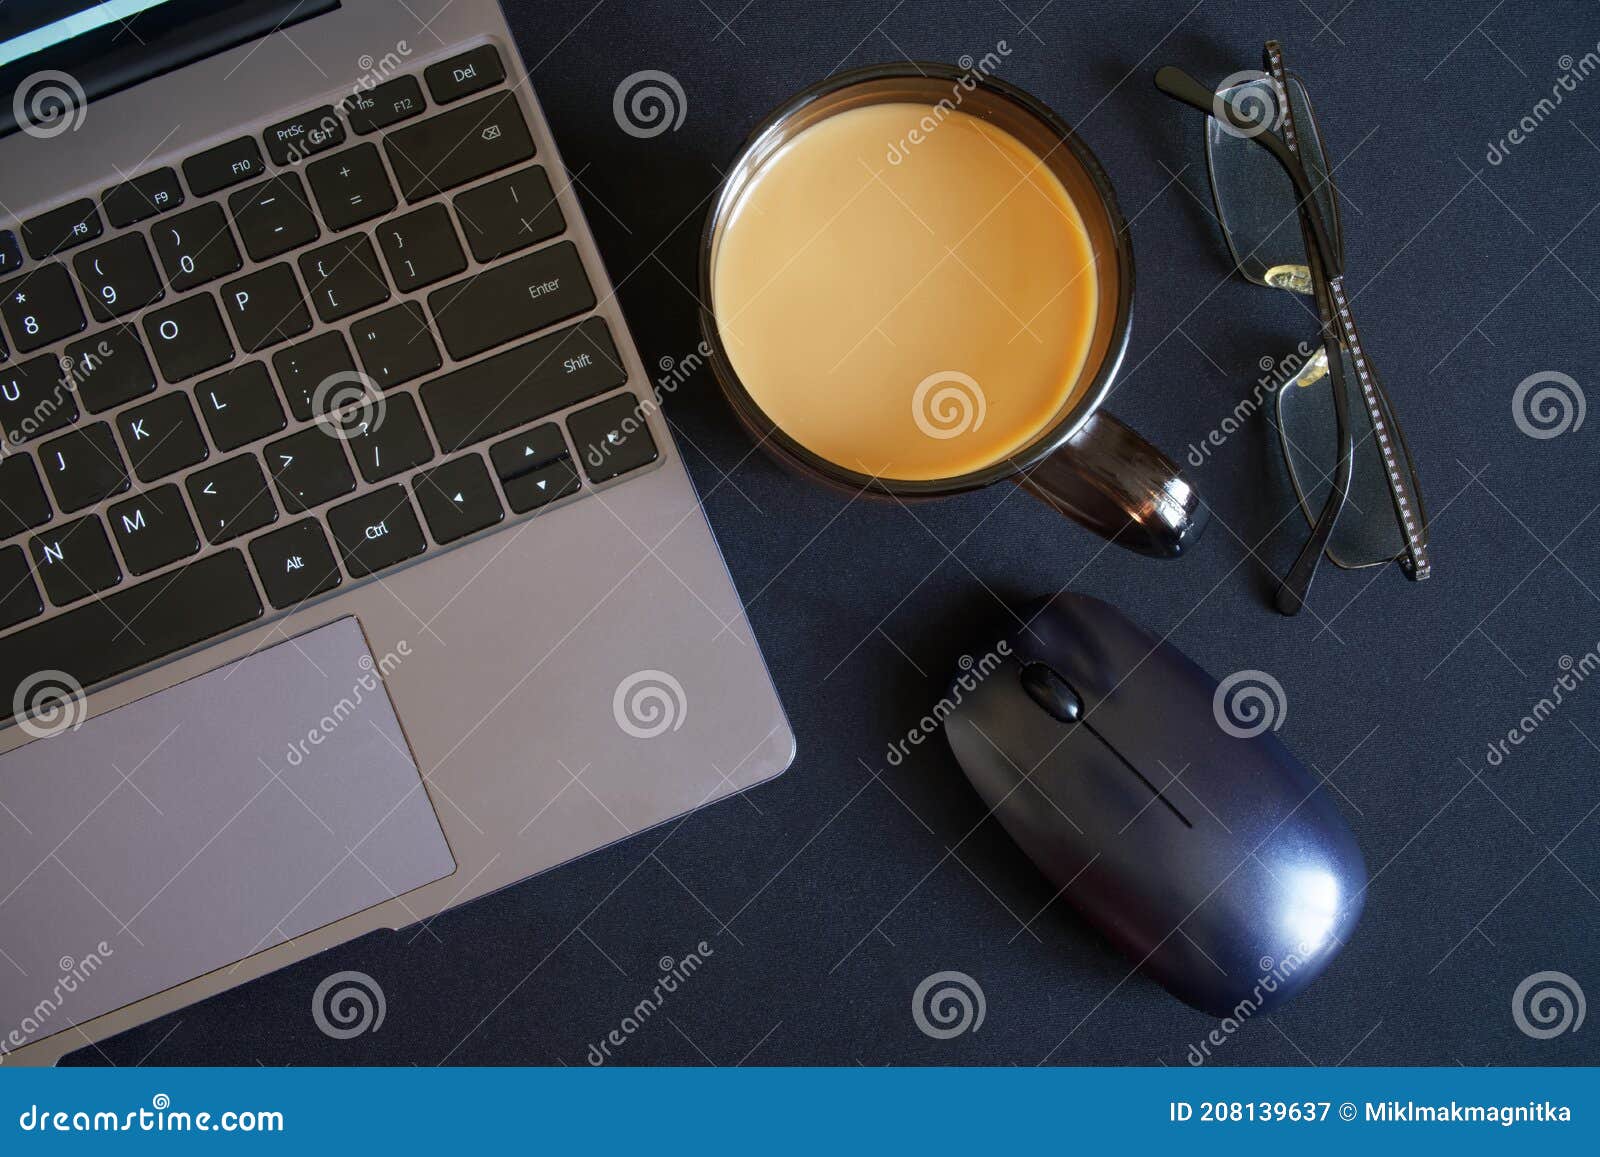 https://thumbs.dreamstime.com/z/mug-coffee-milk-glasses-modern-laptop-ultrabook-computer-mouse-lie-black-background-large-pad-coworking-work-208139637.jpg